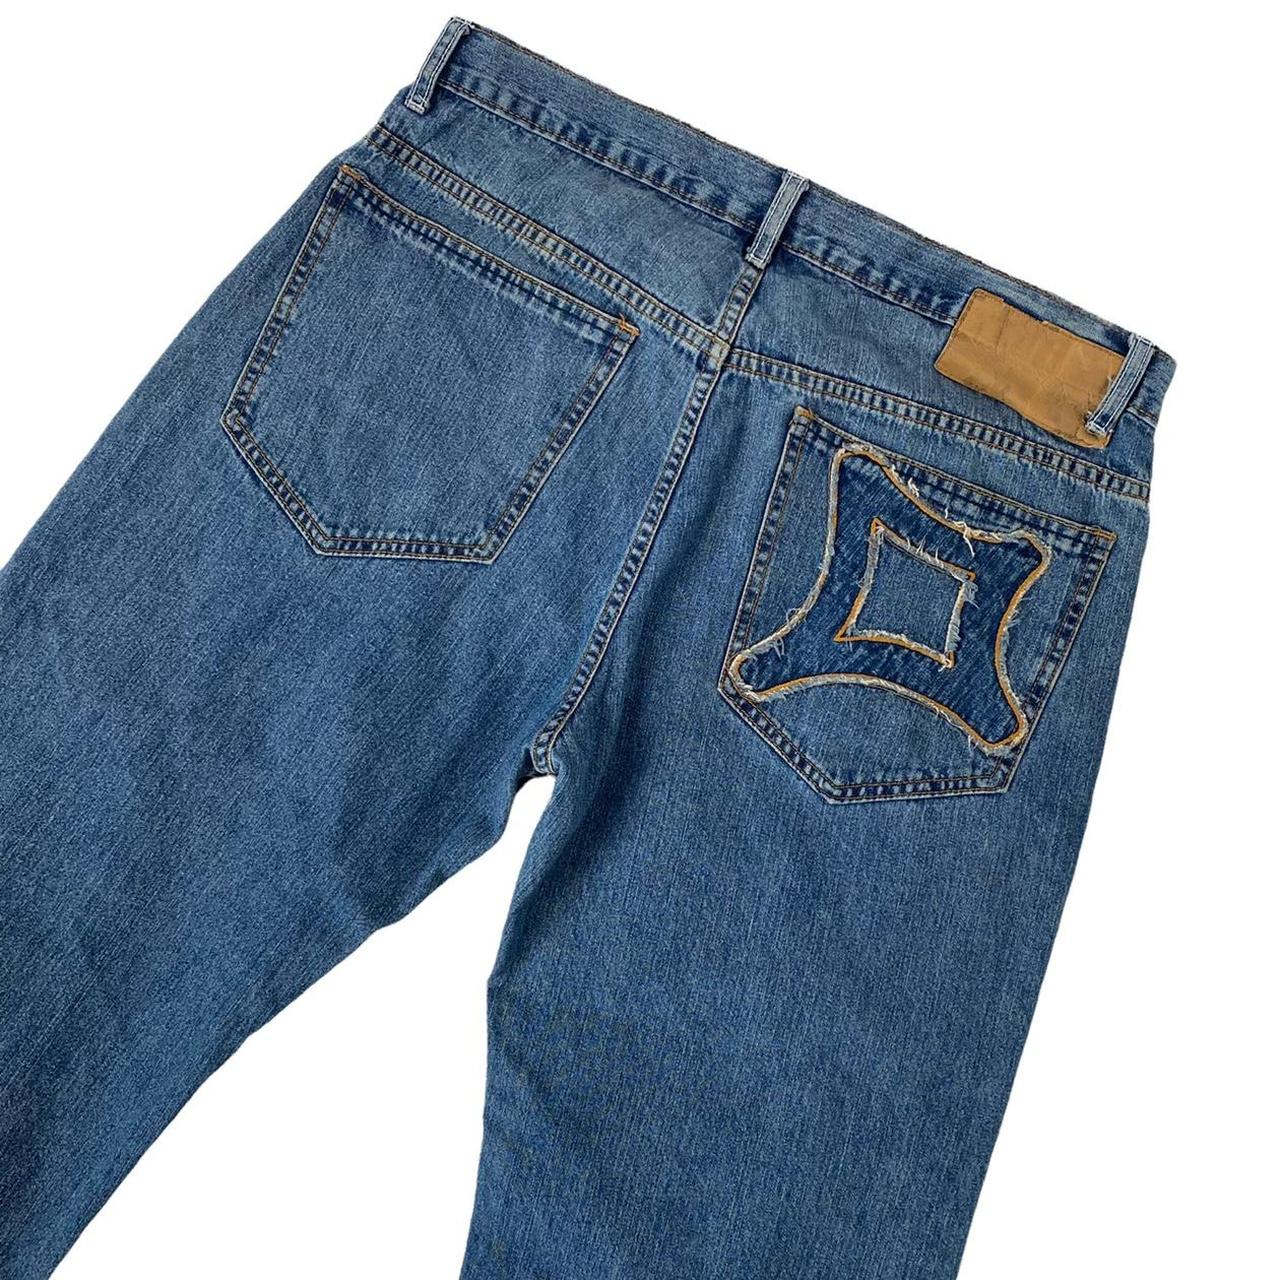 Product Image 1 - Vintage Freshjive Jeans Straight Leg